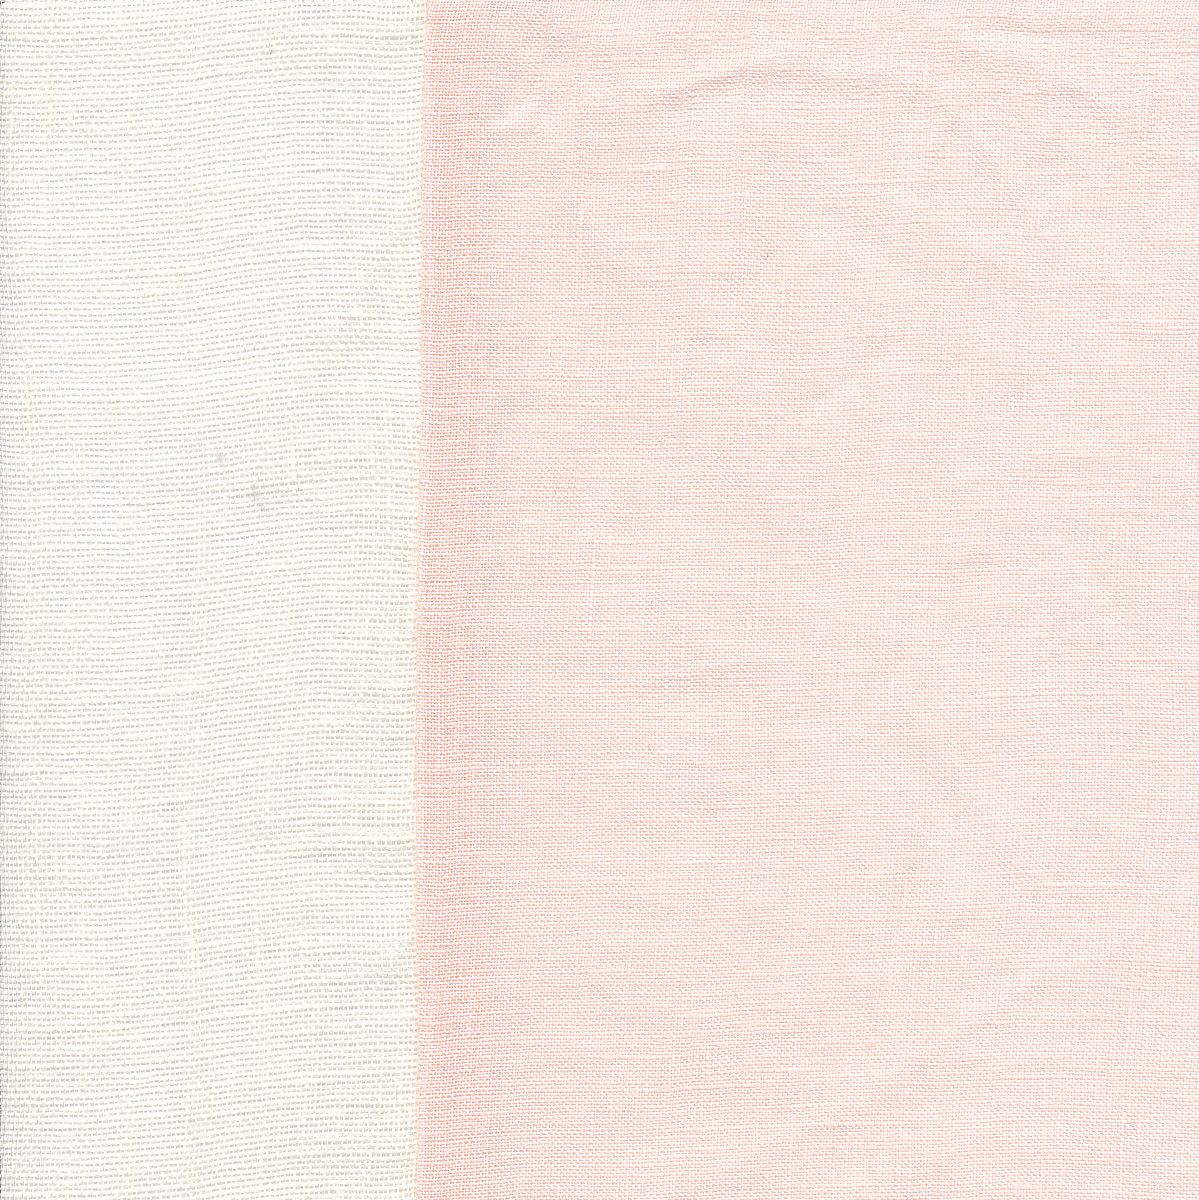 Lulla Smith Alcott Douillette/Duvet & Dec Pillows Fabric Sample - Ballet